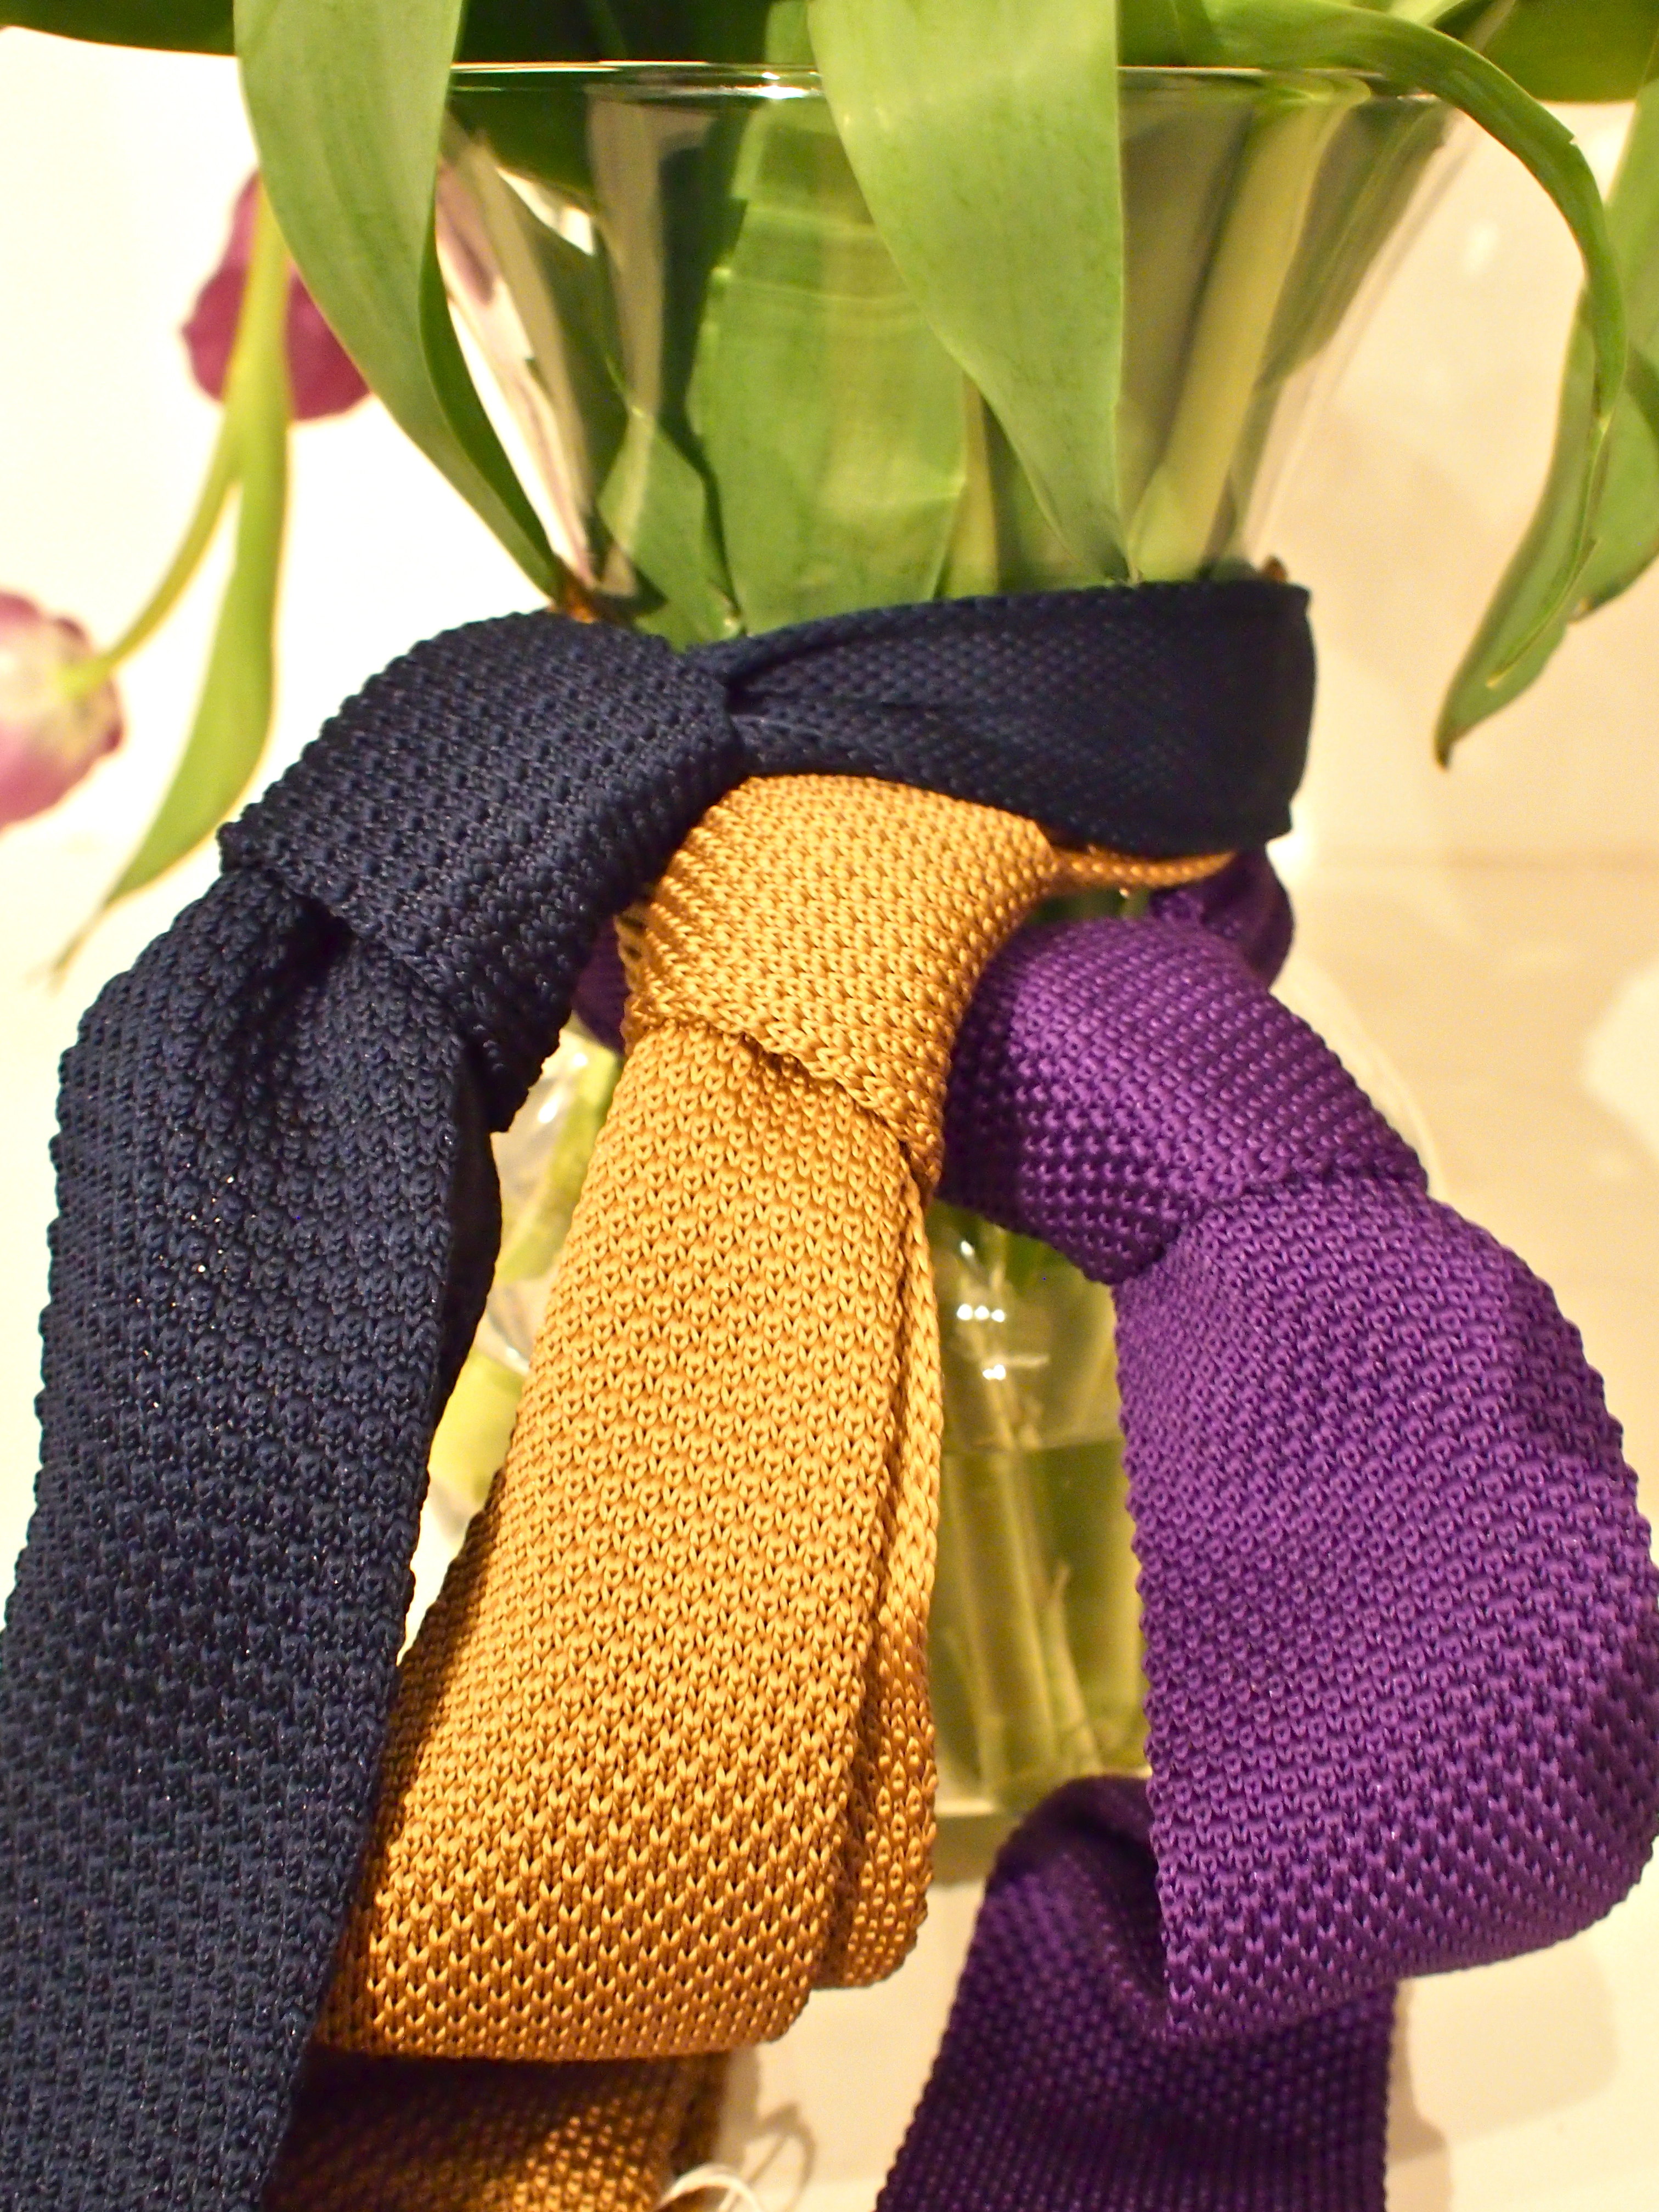 Amazing Knit Ties for Spring by Haight & Ashbury, Dibi & Van Gils ...